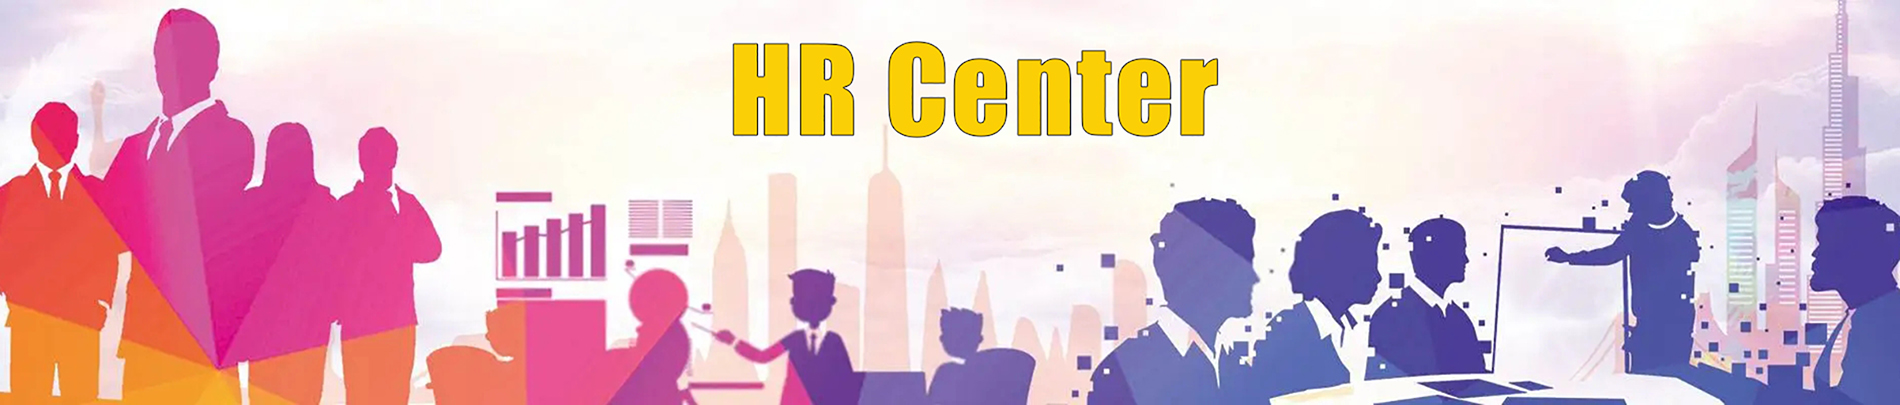 HR Center - Recruitment - We Want You